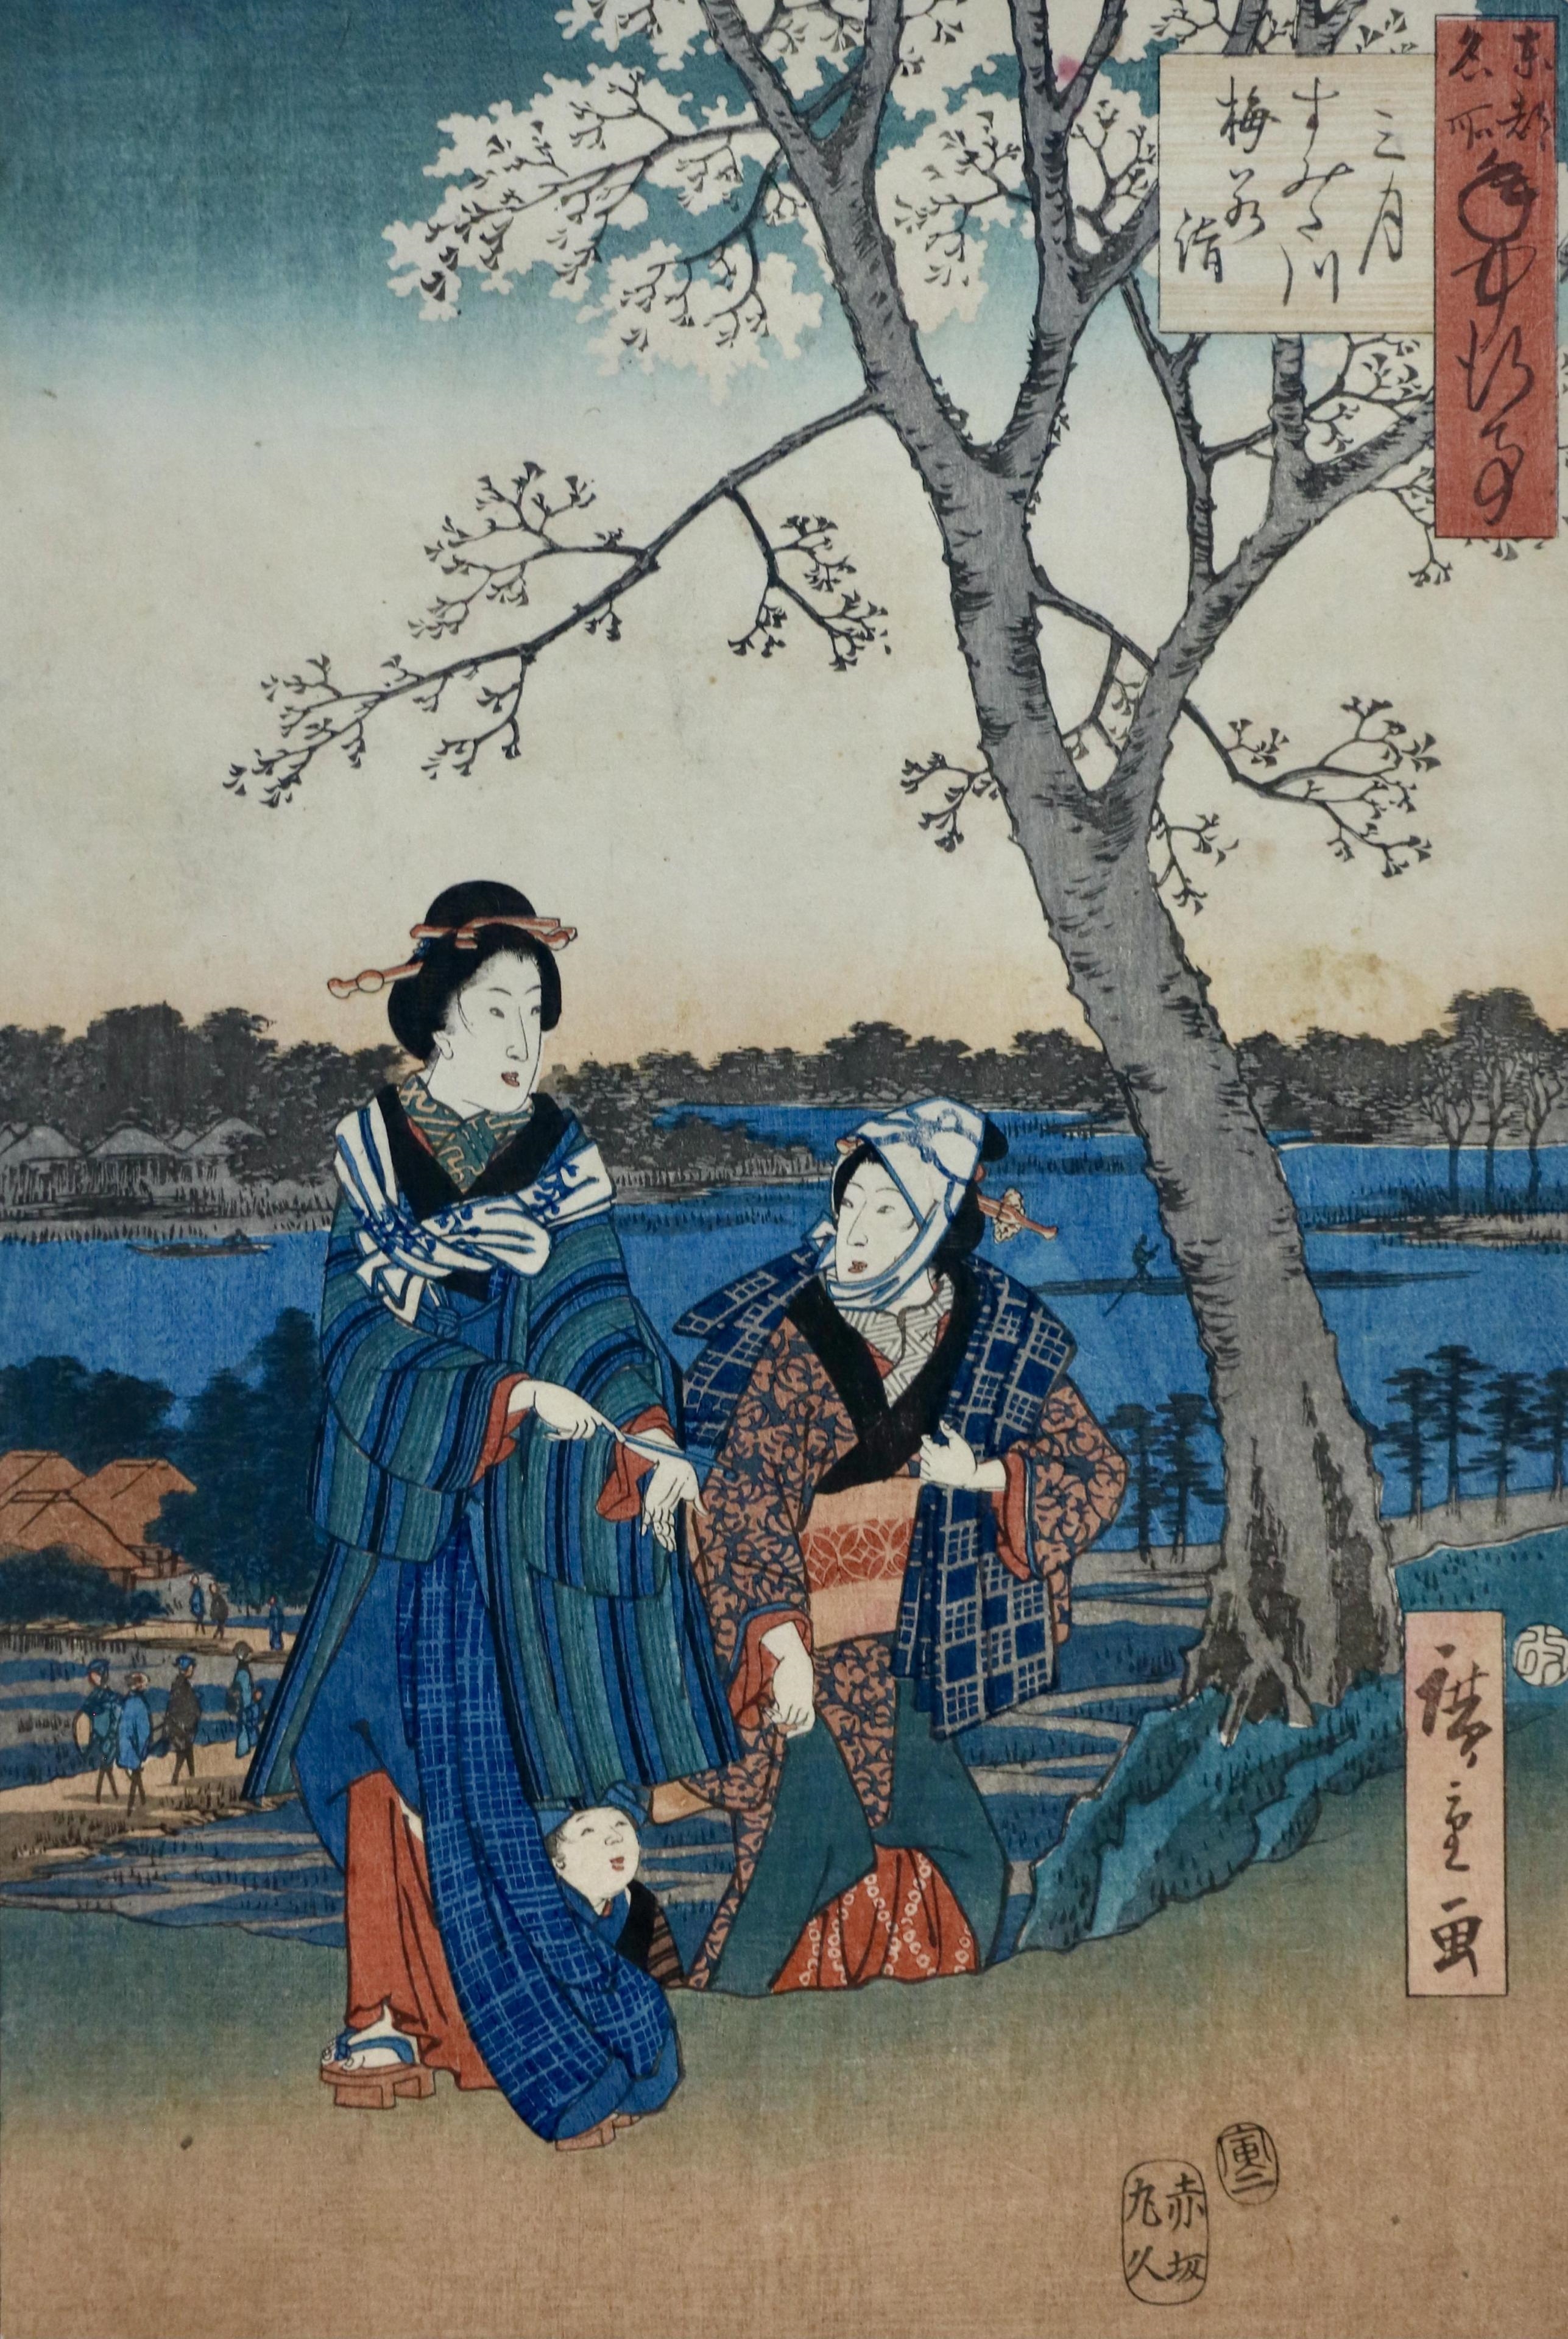 [JAPANESE PRINT] – HIROSHIGE, Utagawa (1797-1858). (Plum-blossom viewing at Sumida River in the third month). by Utagawa Hiroshige